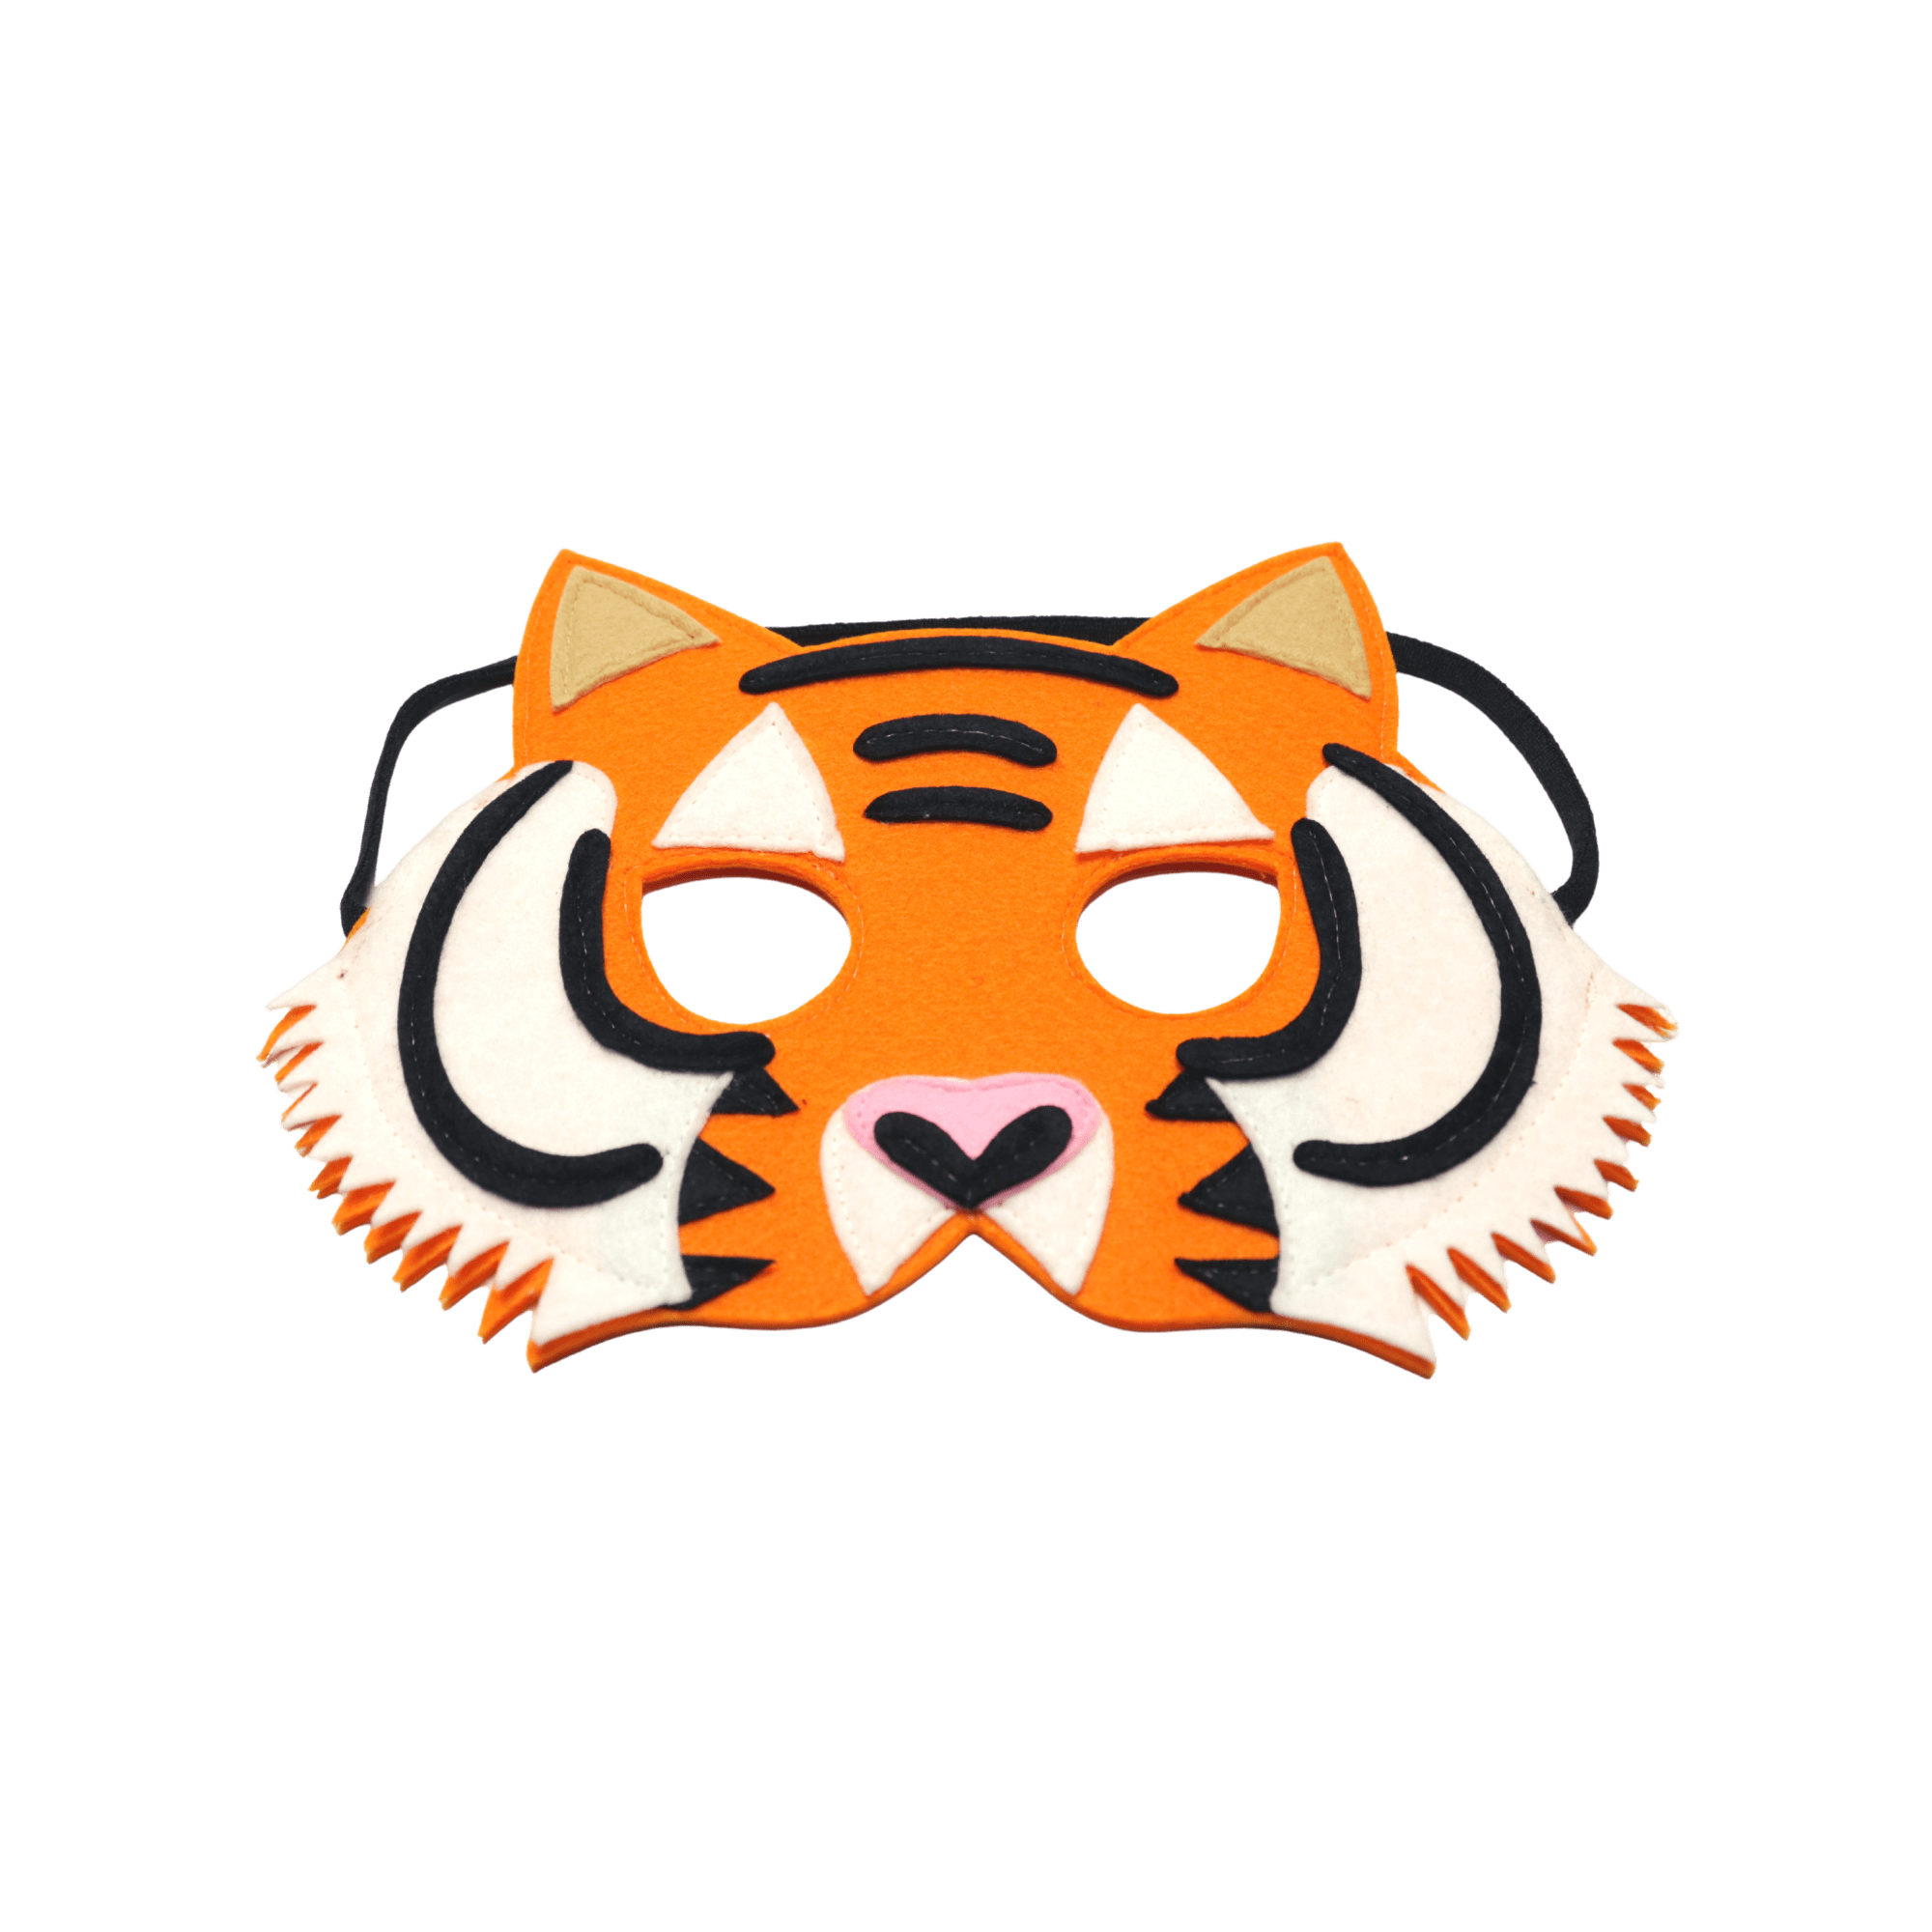 Tiger Felt Mask